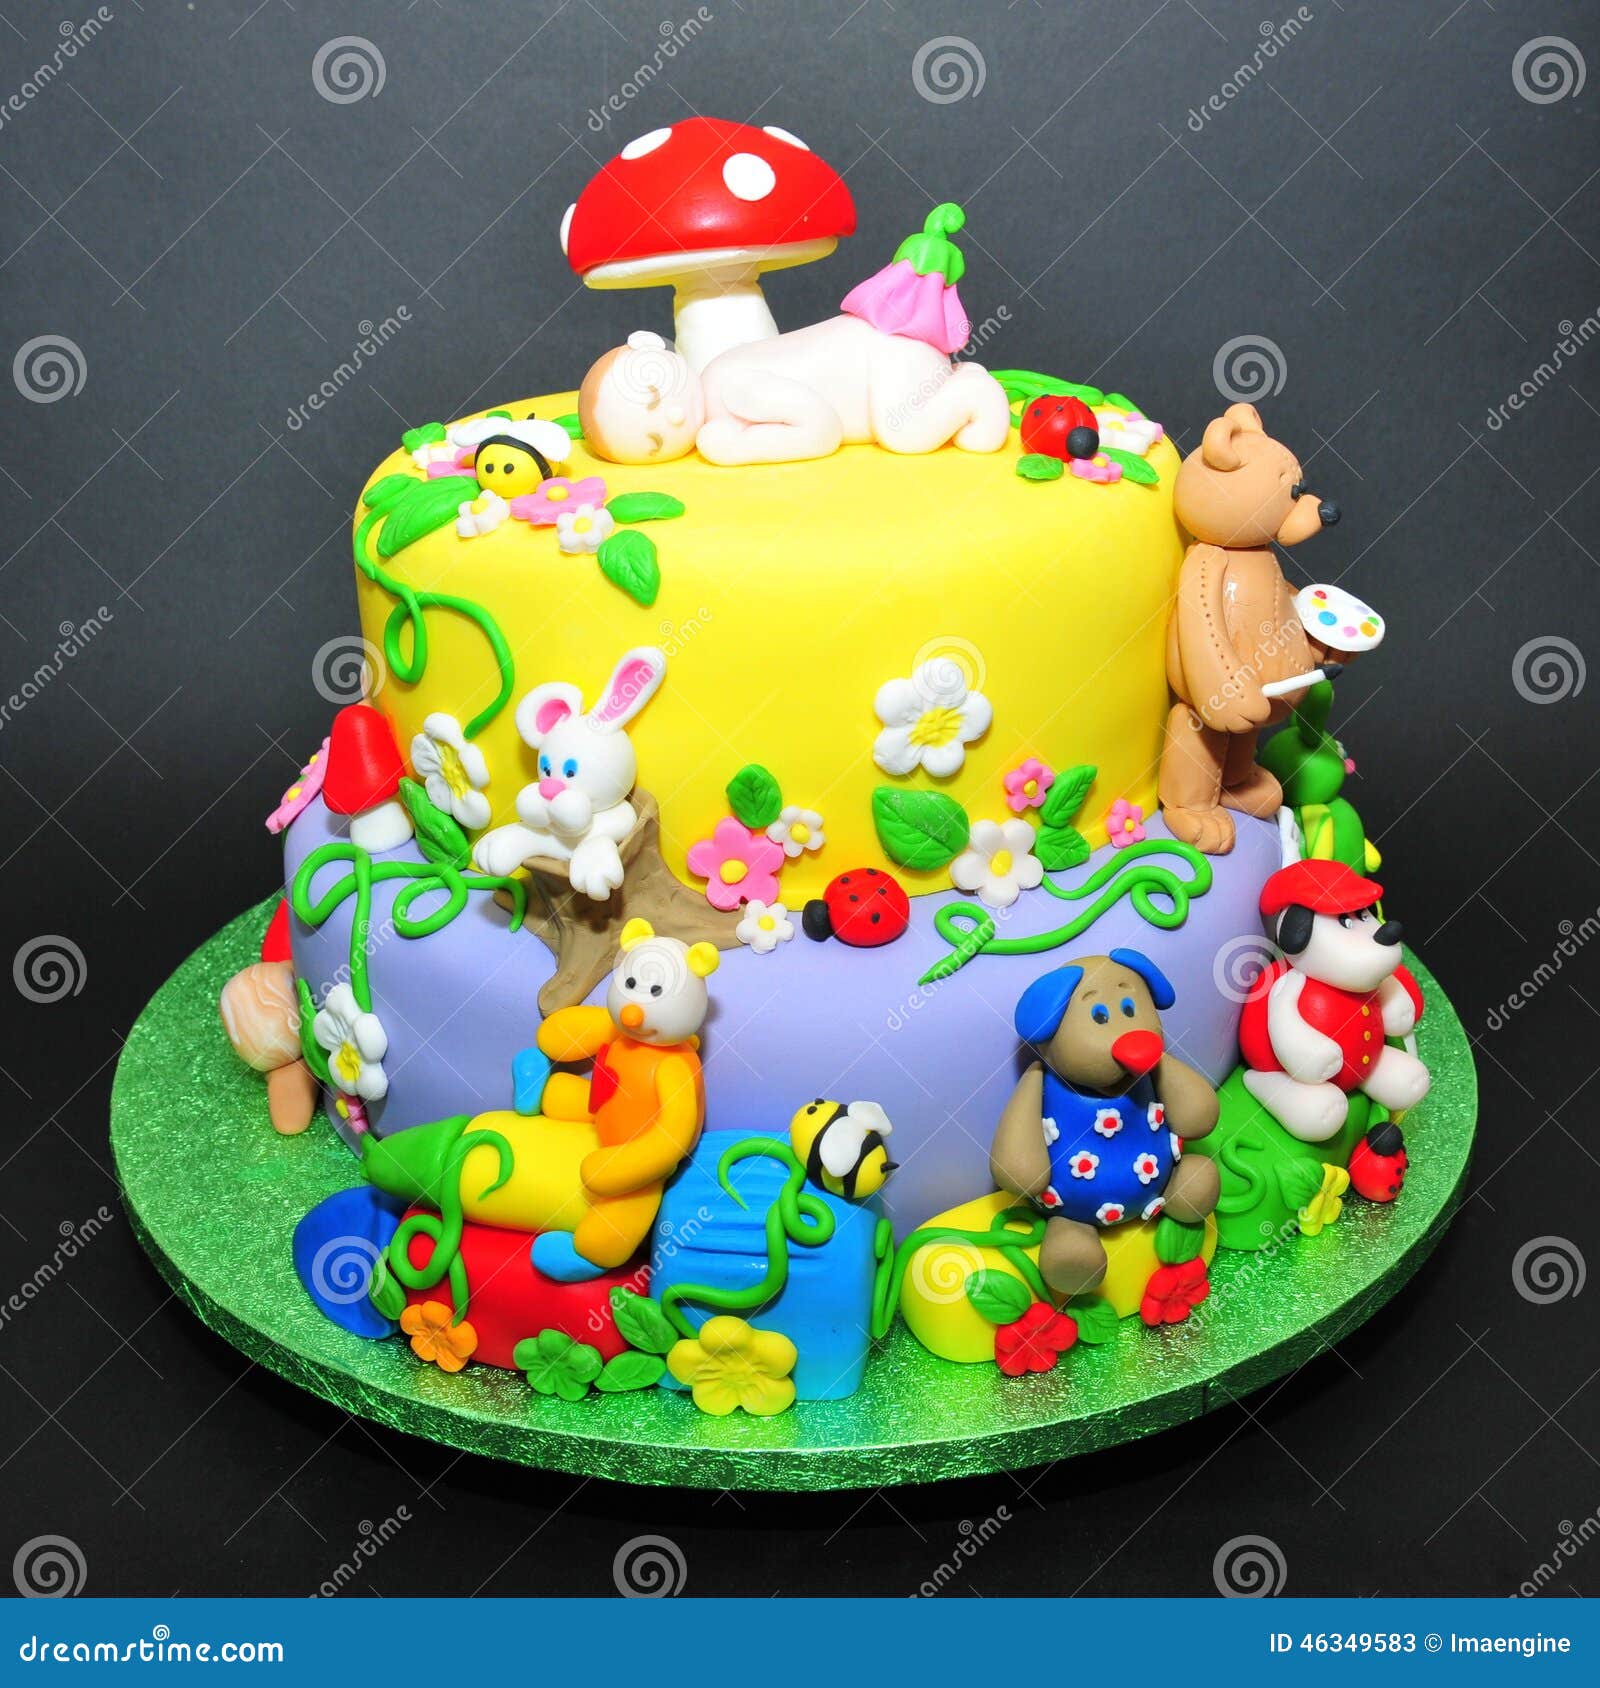 ☀️ Kids party cute fondant animals cake. Happy Sundate everyone ✨ Shop cakes/  desserts online: www.riverashbakery.com WhatsApp 87003352 | Instagram